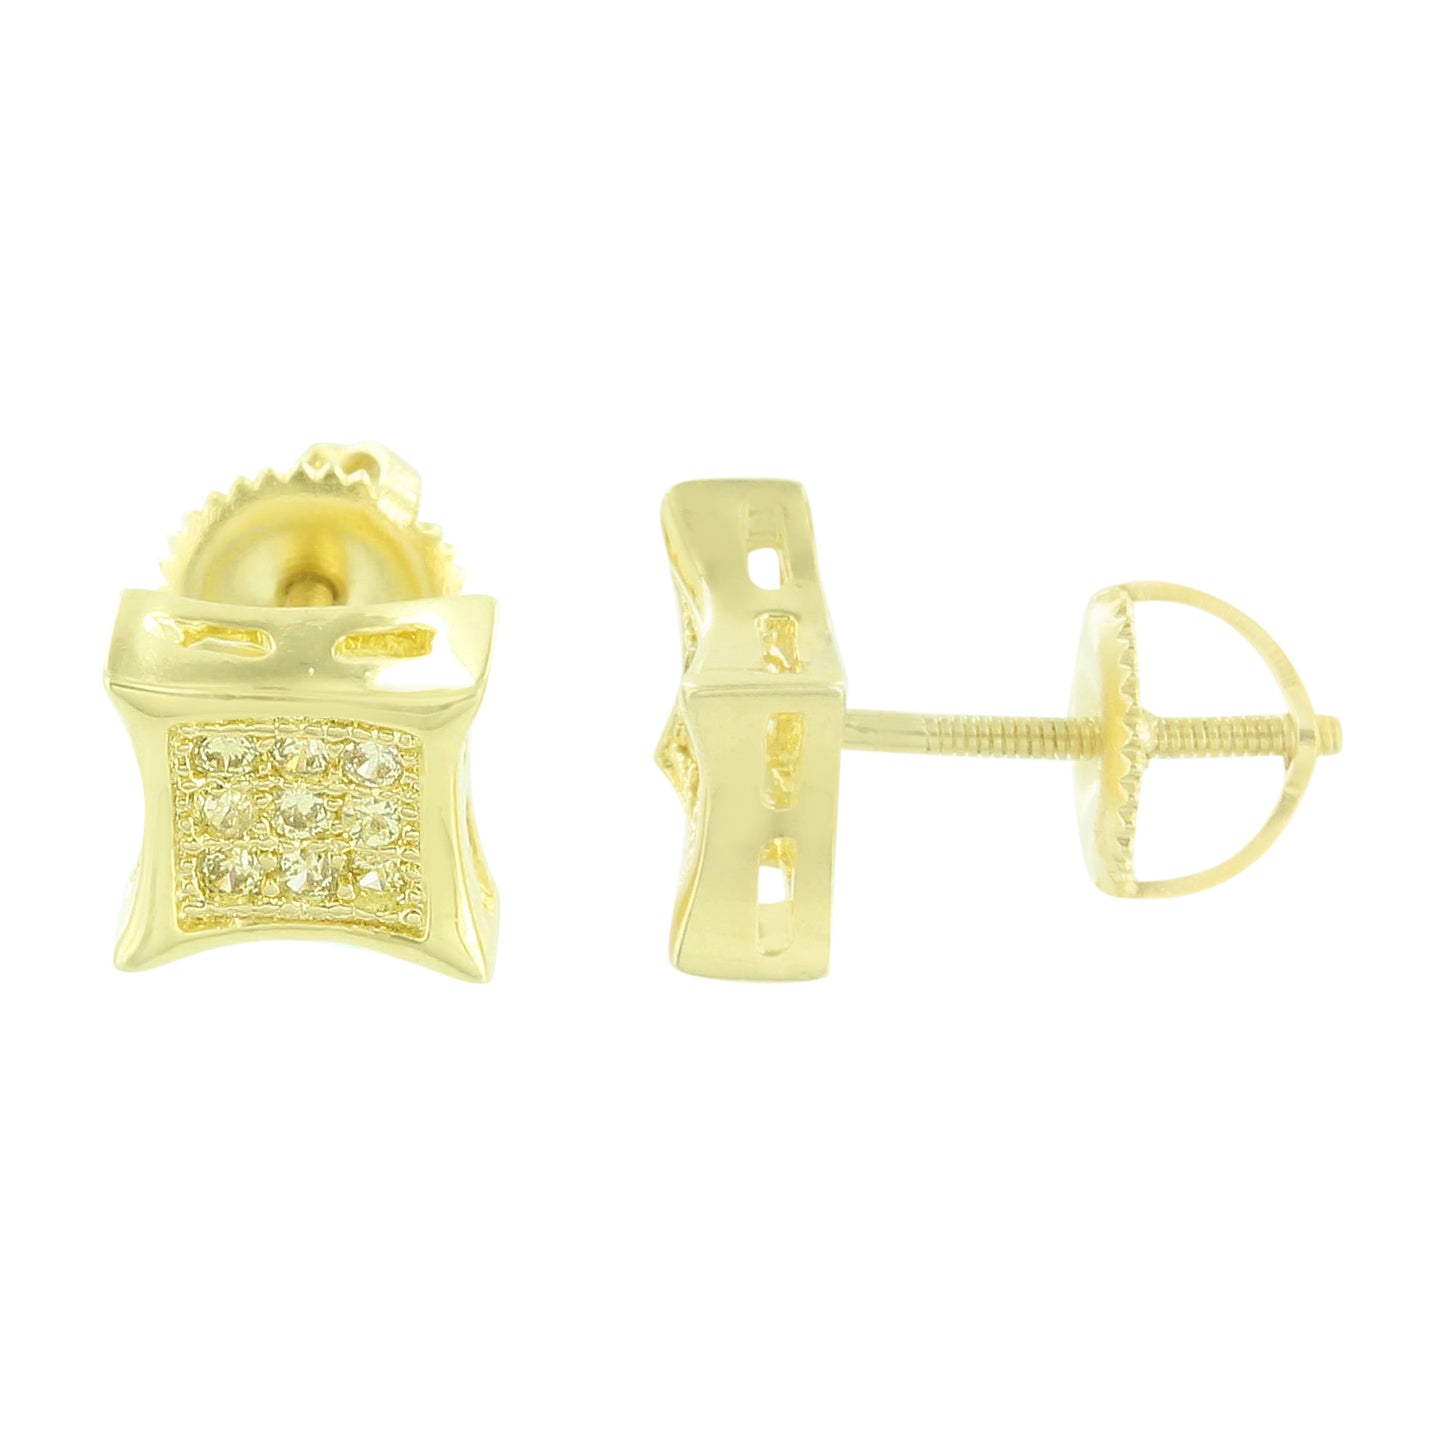 Yellow Lab Diamonds Earrings Kite Shape Screw Back 14k Yellow Gold Finish Unisex